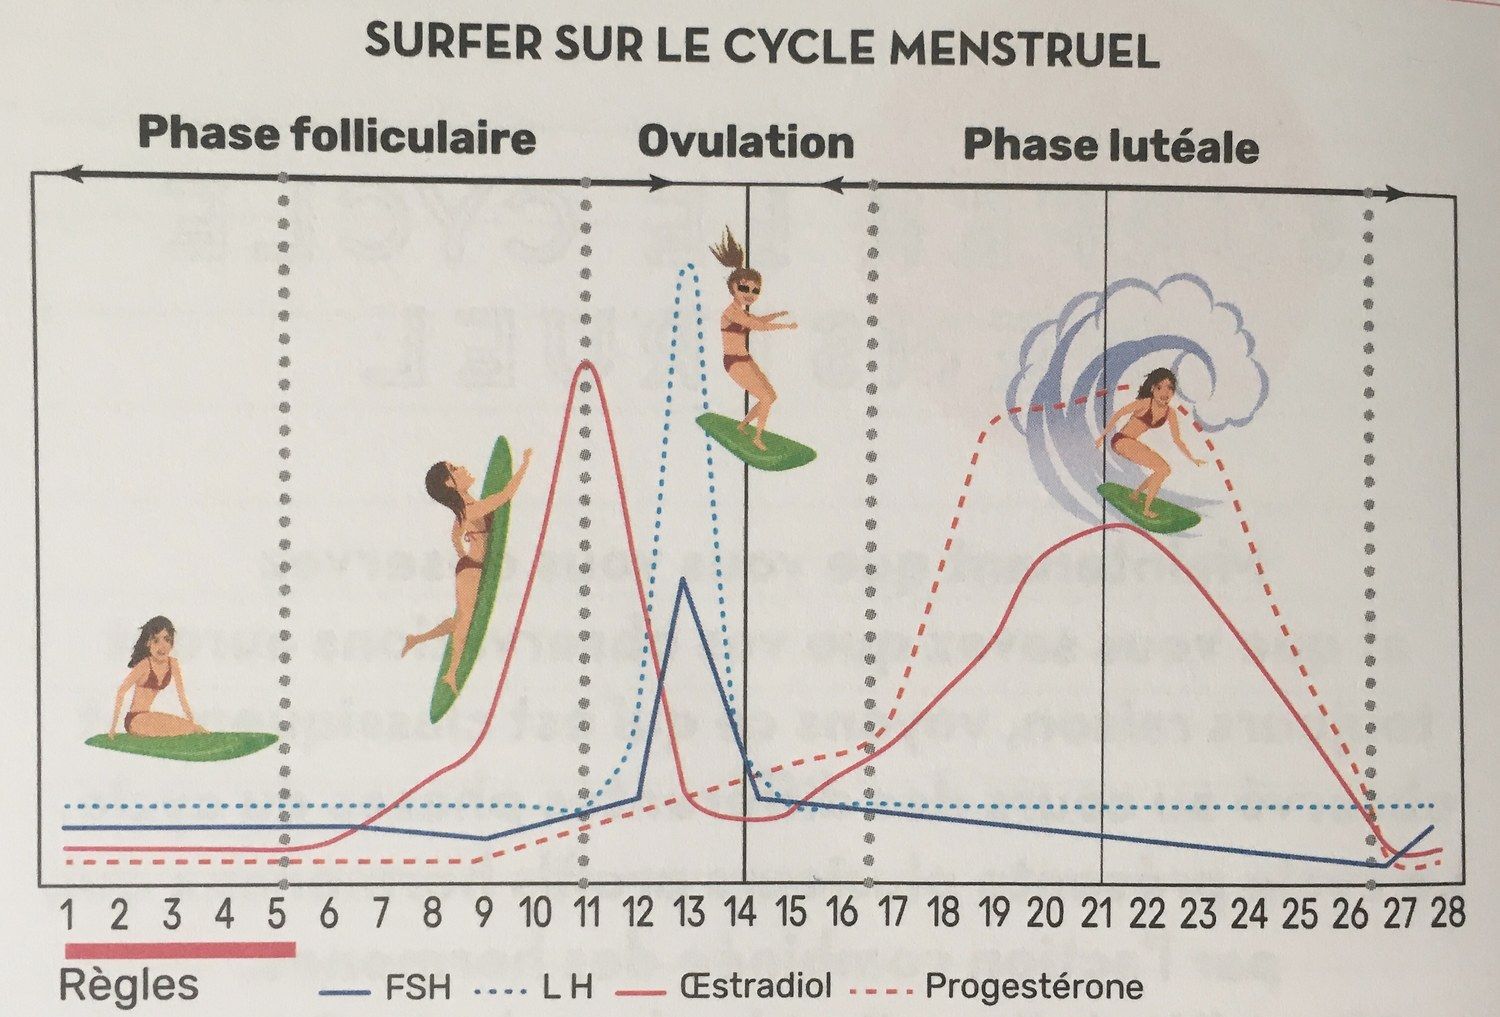 11 idées de Kiffe ton Cycle  cycle menstruel, cycle, cycle féminin